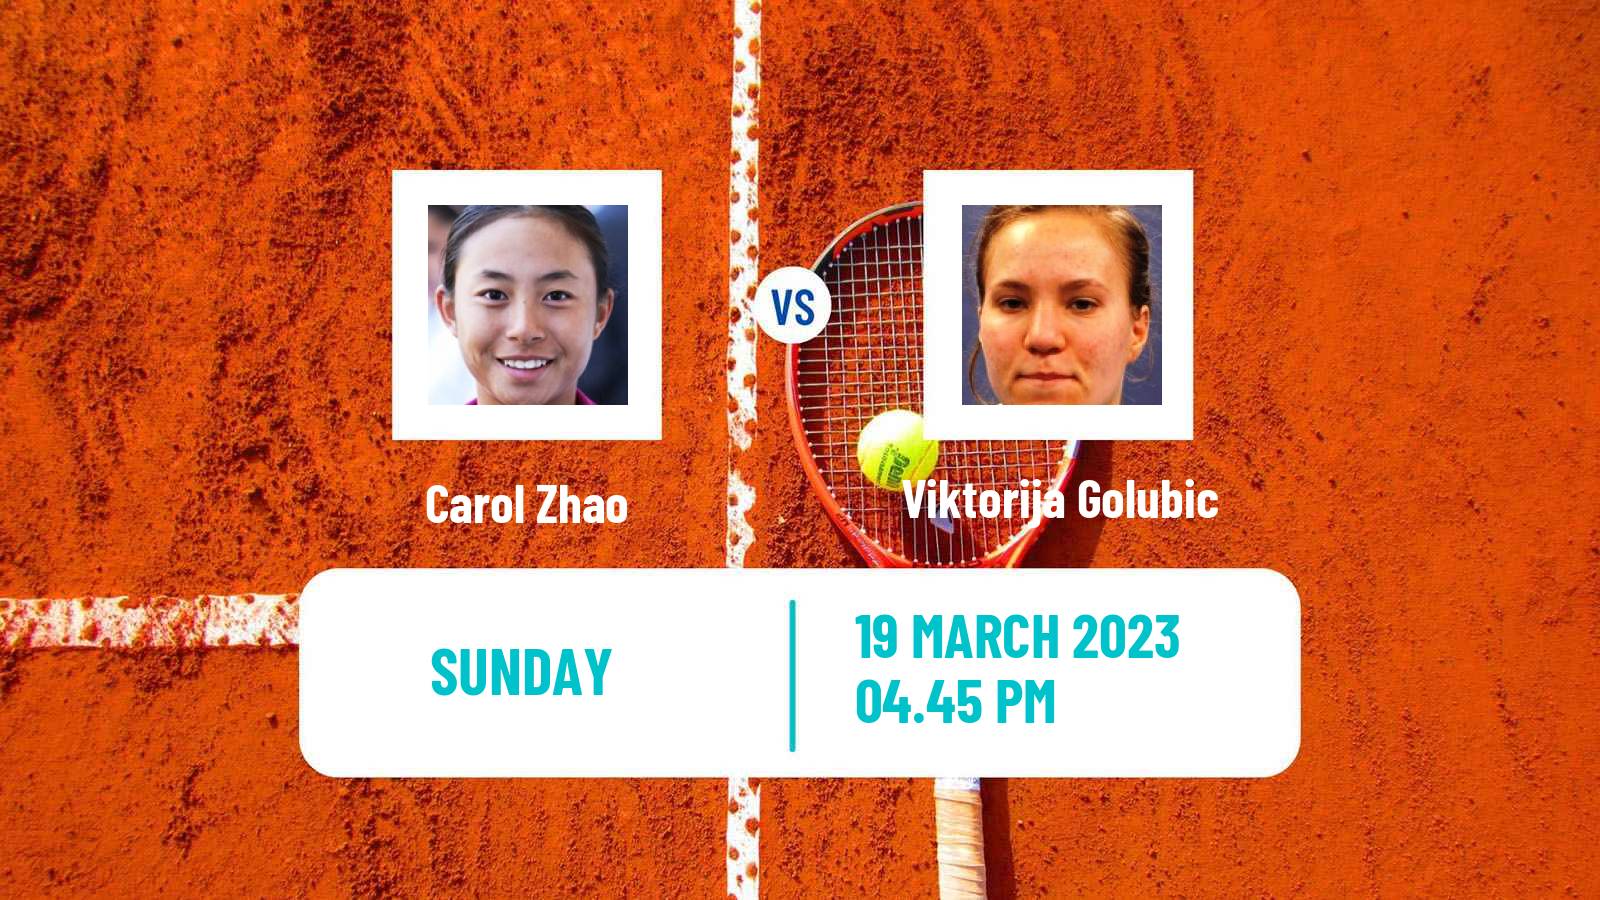 Tennis WTA Miami Carol Zhao - Viktorija Golubic